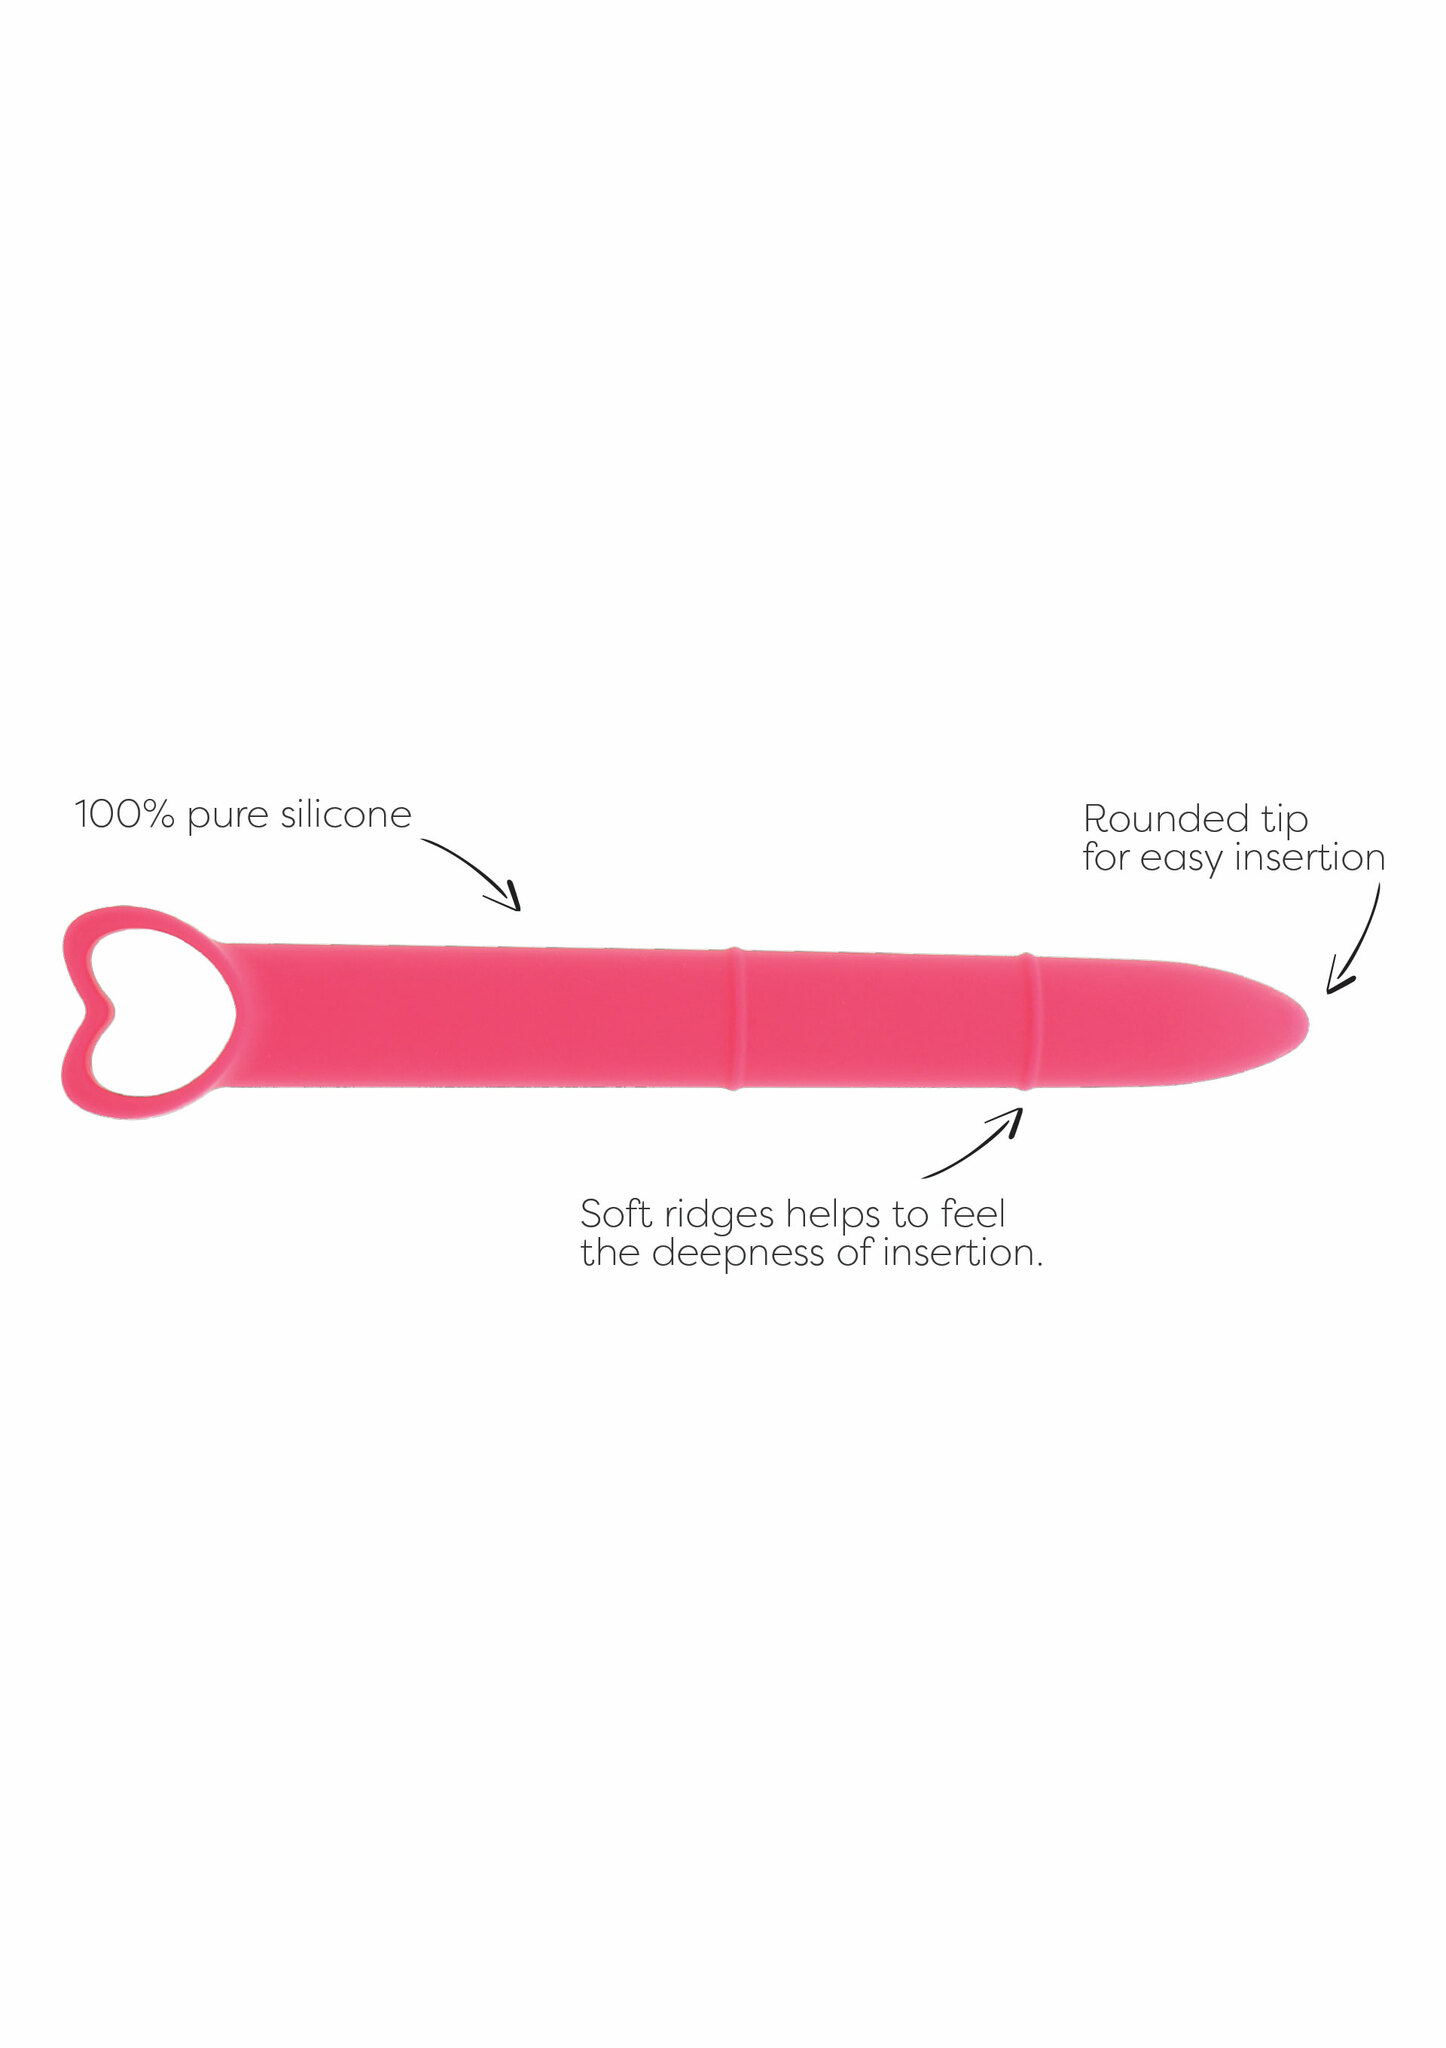 Intimate Health - Silicone Vaginal Dilators 3pcs